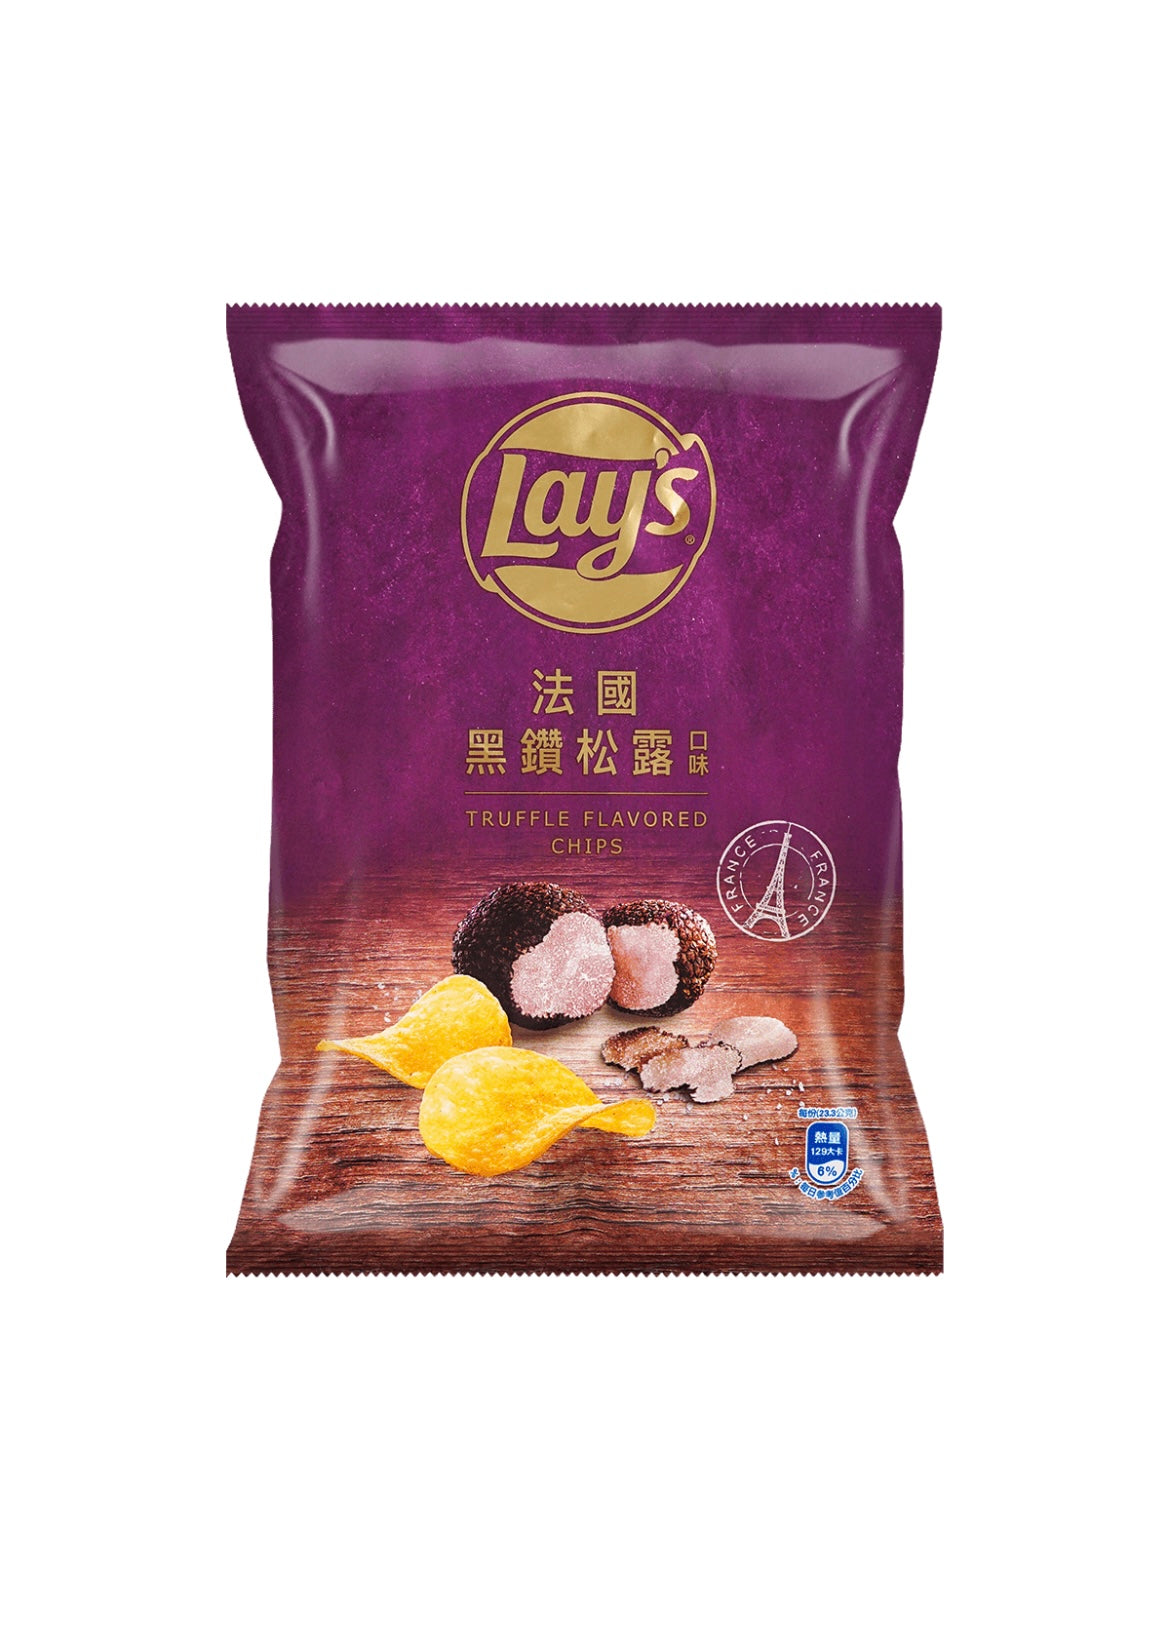 Lays Truffle Chips (Taiwan)